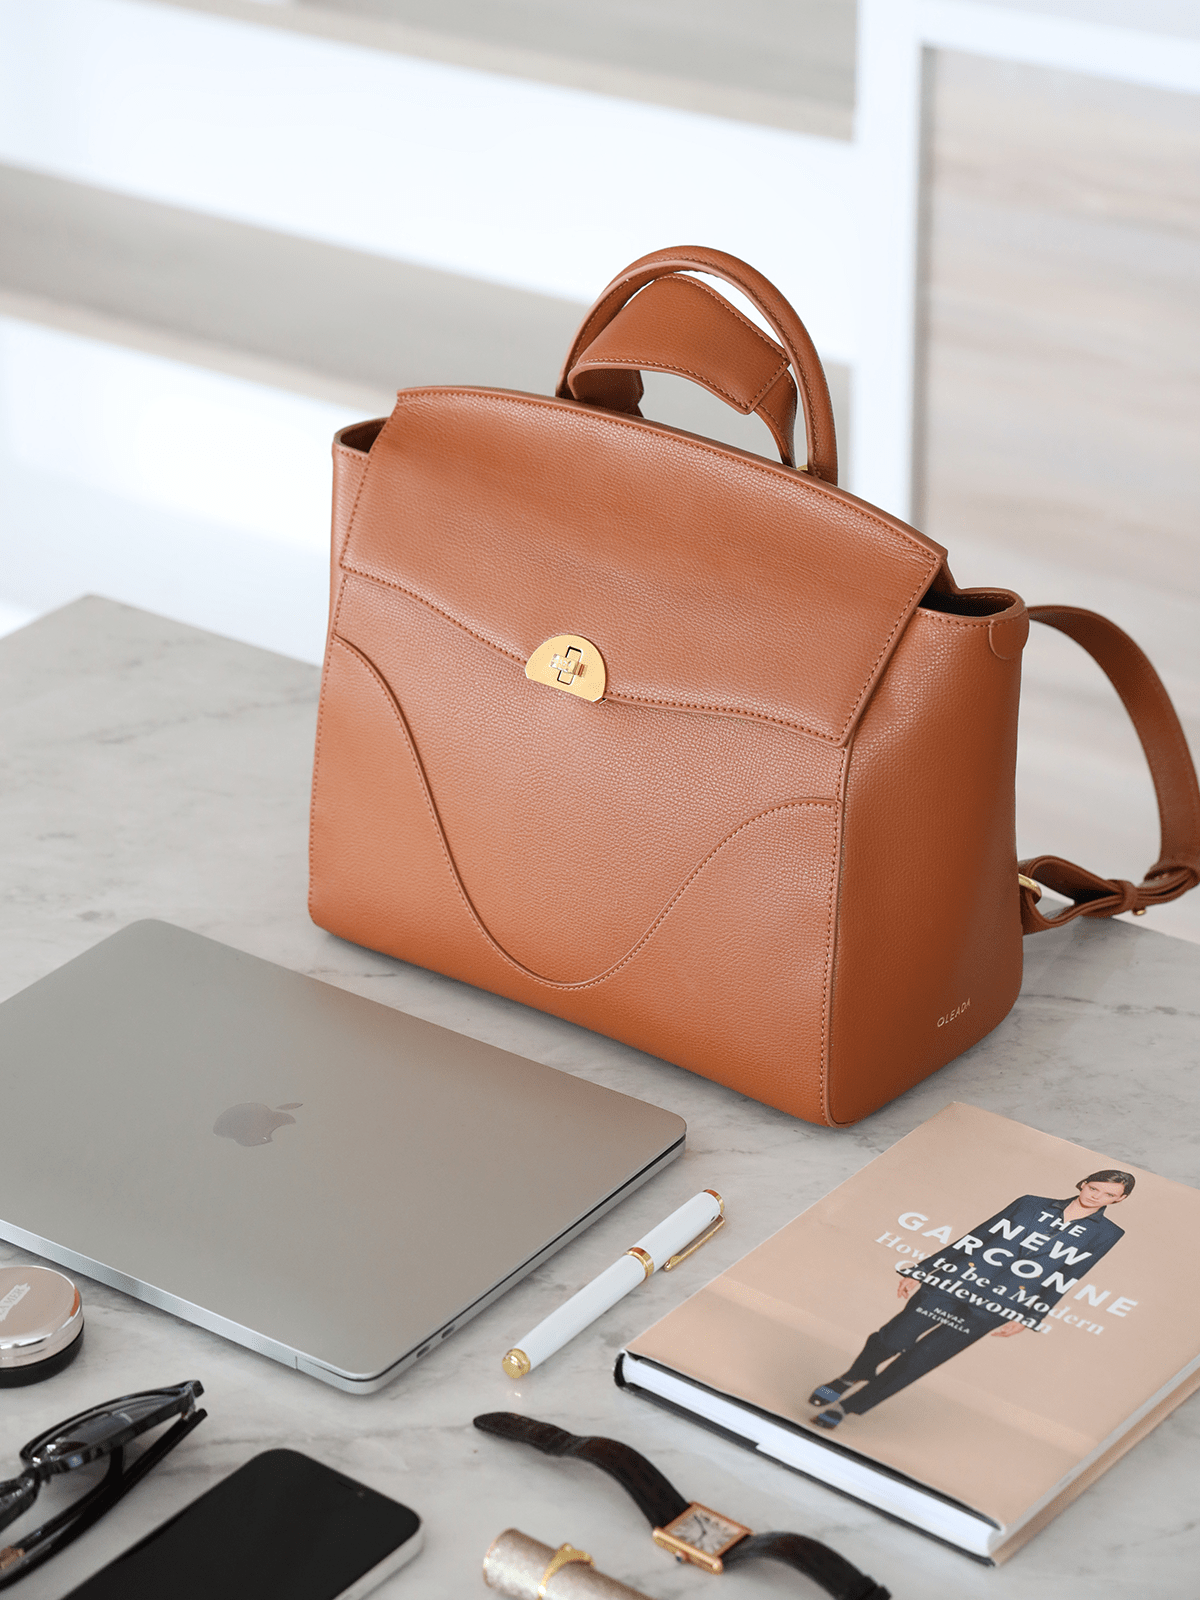 OLEADA Apparel and Accessories > Women > Work Bag > Leather Handbag > Travel Backpack for Business Wavia Bag Chestnut